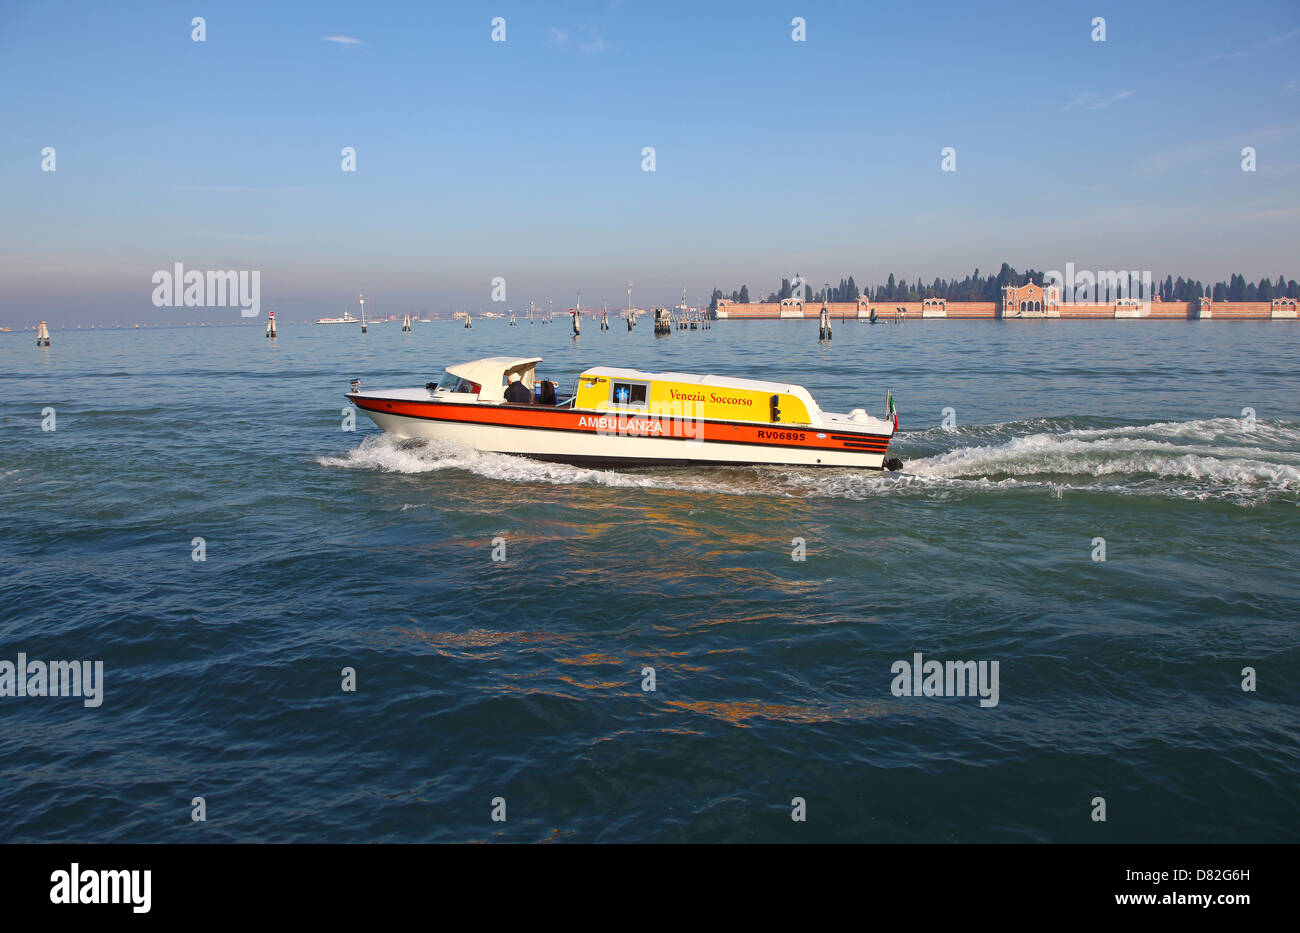 A water ambulance in the Venice lagoon Venice Italy Stock Photo